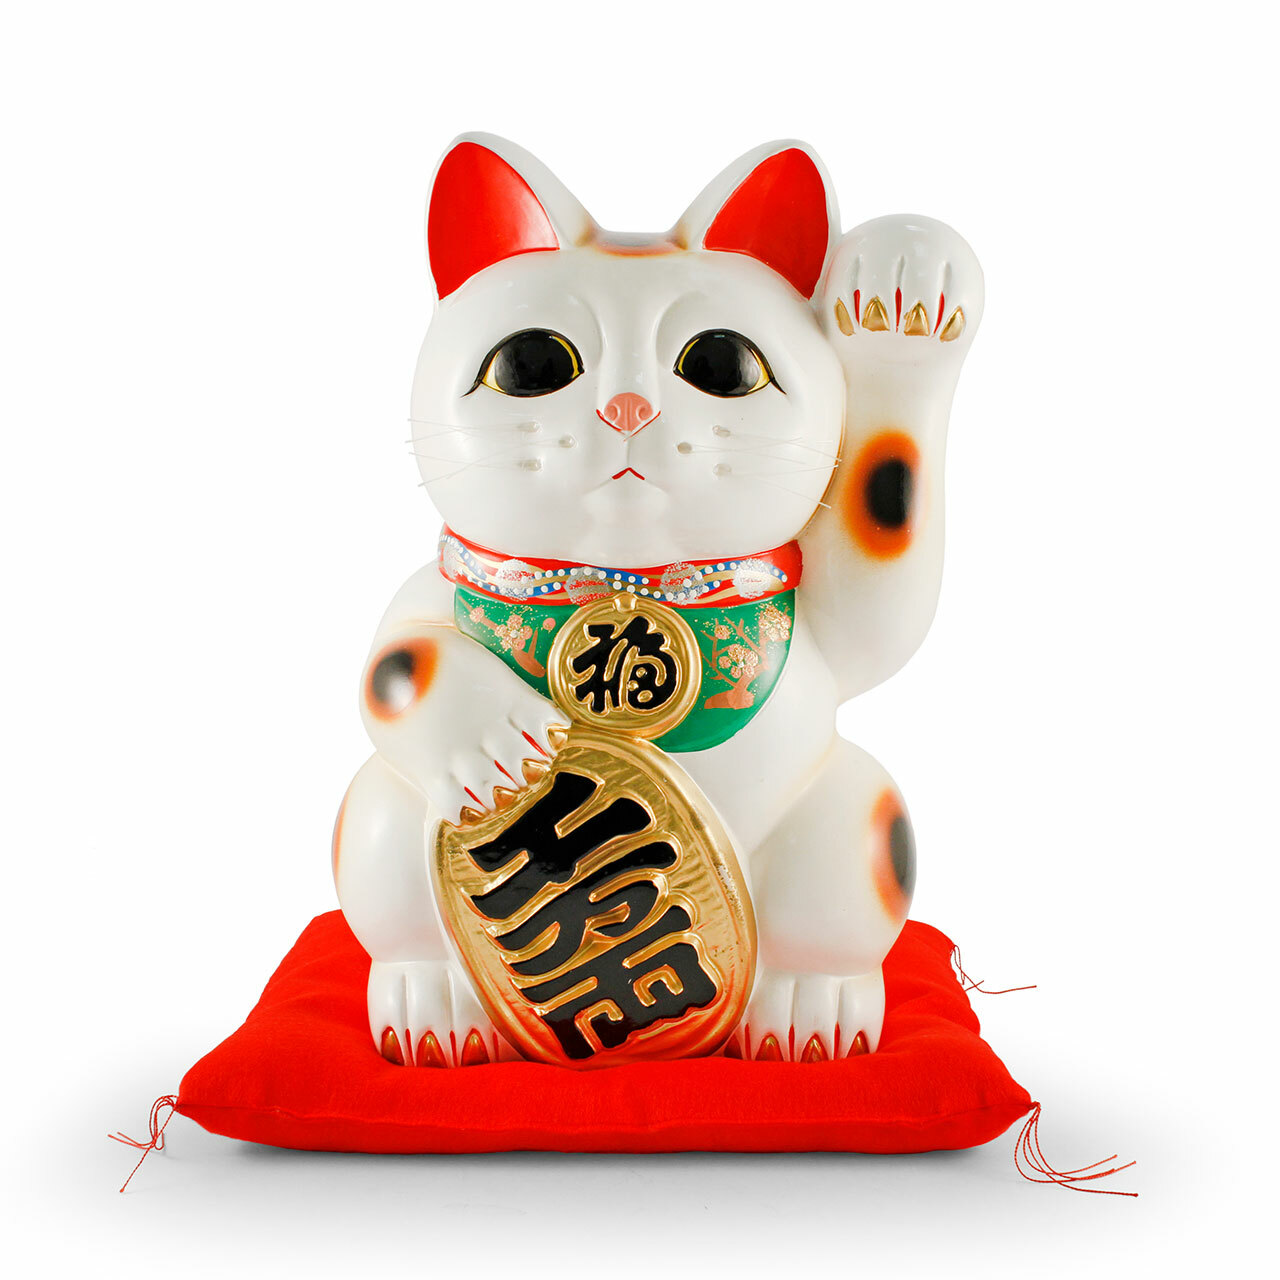 White statue of Maneki-neko cat